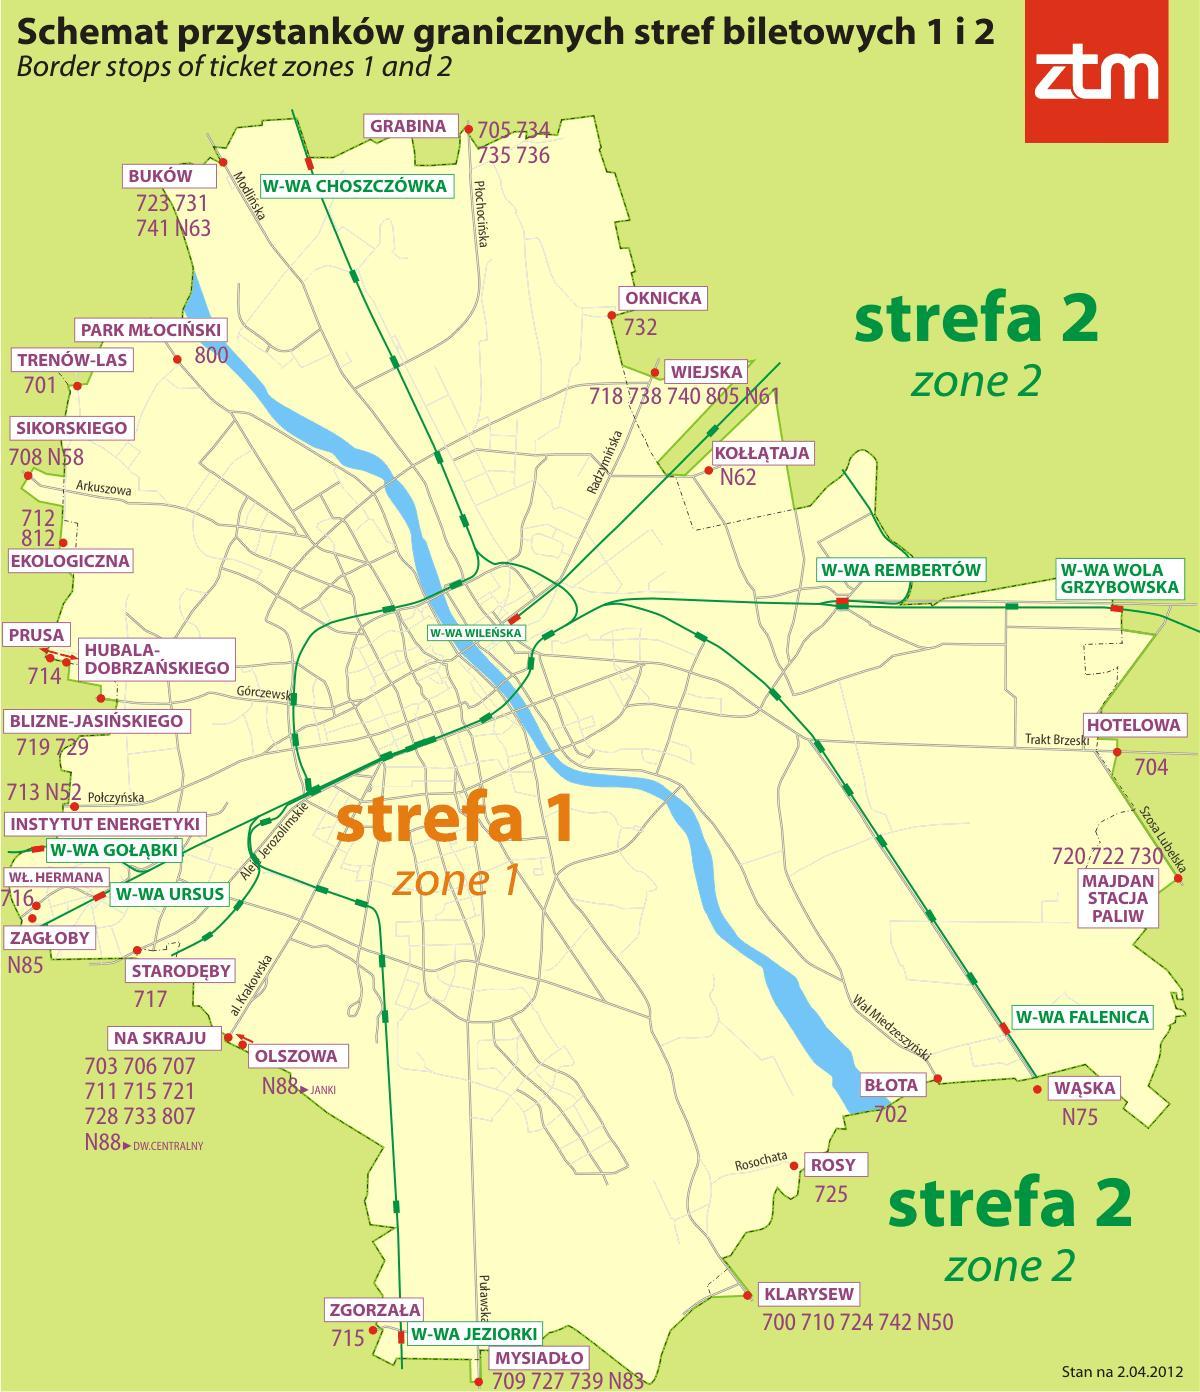 Warszawa zon 1 läge på karta